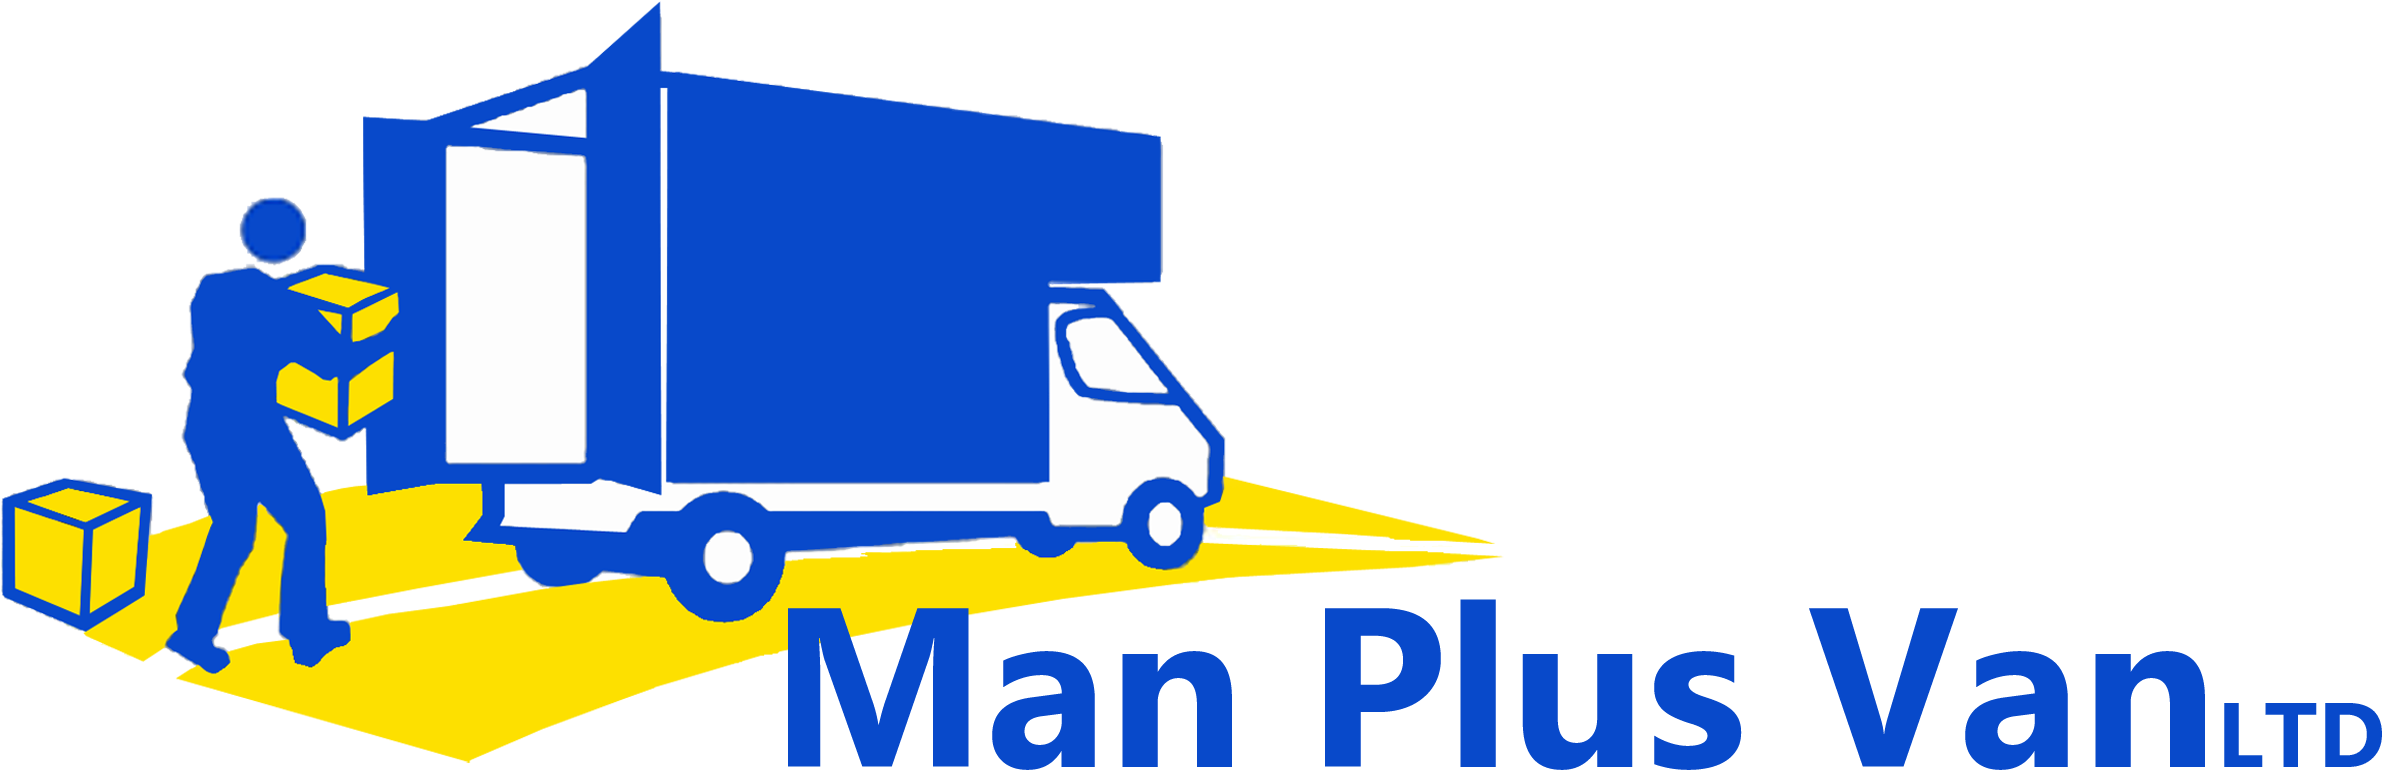 Man Plus Van Ltd - Man Plus Van Ltd (2400x800)